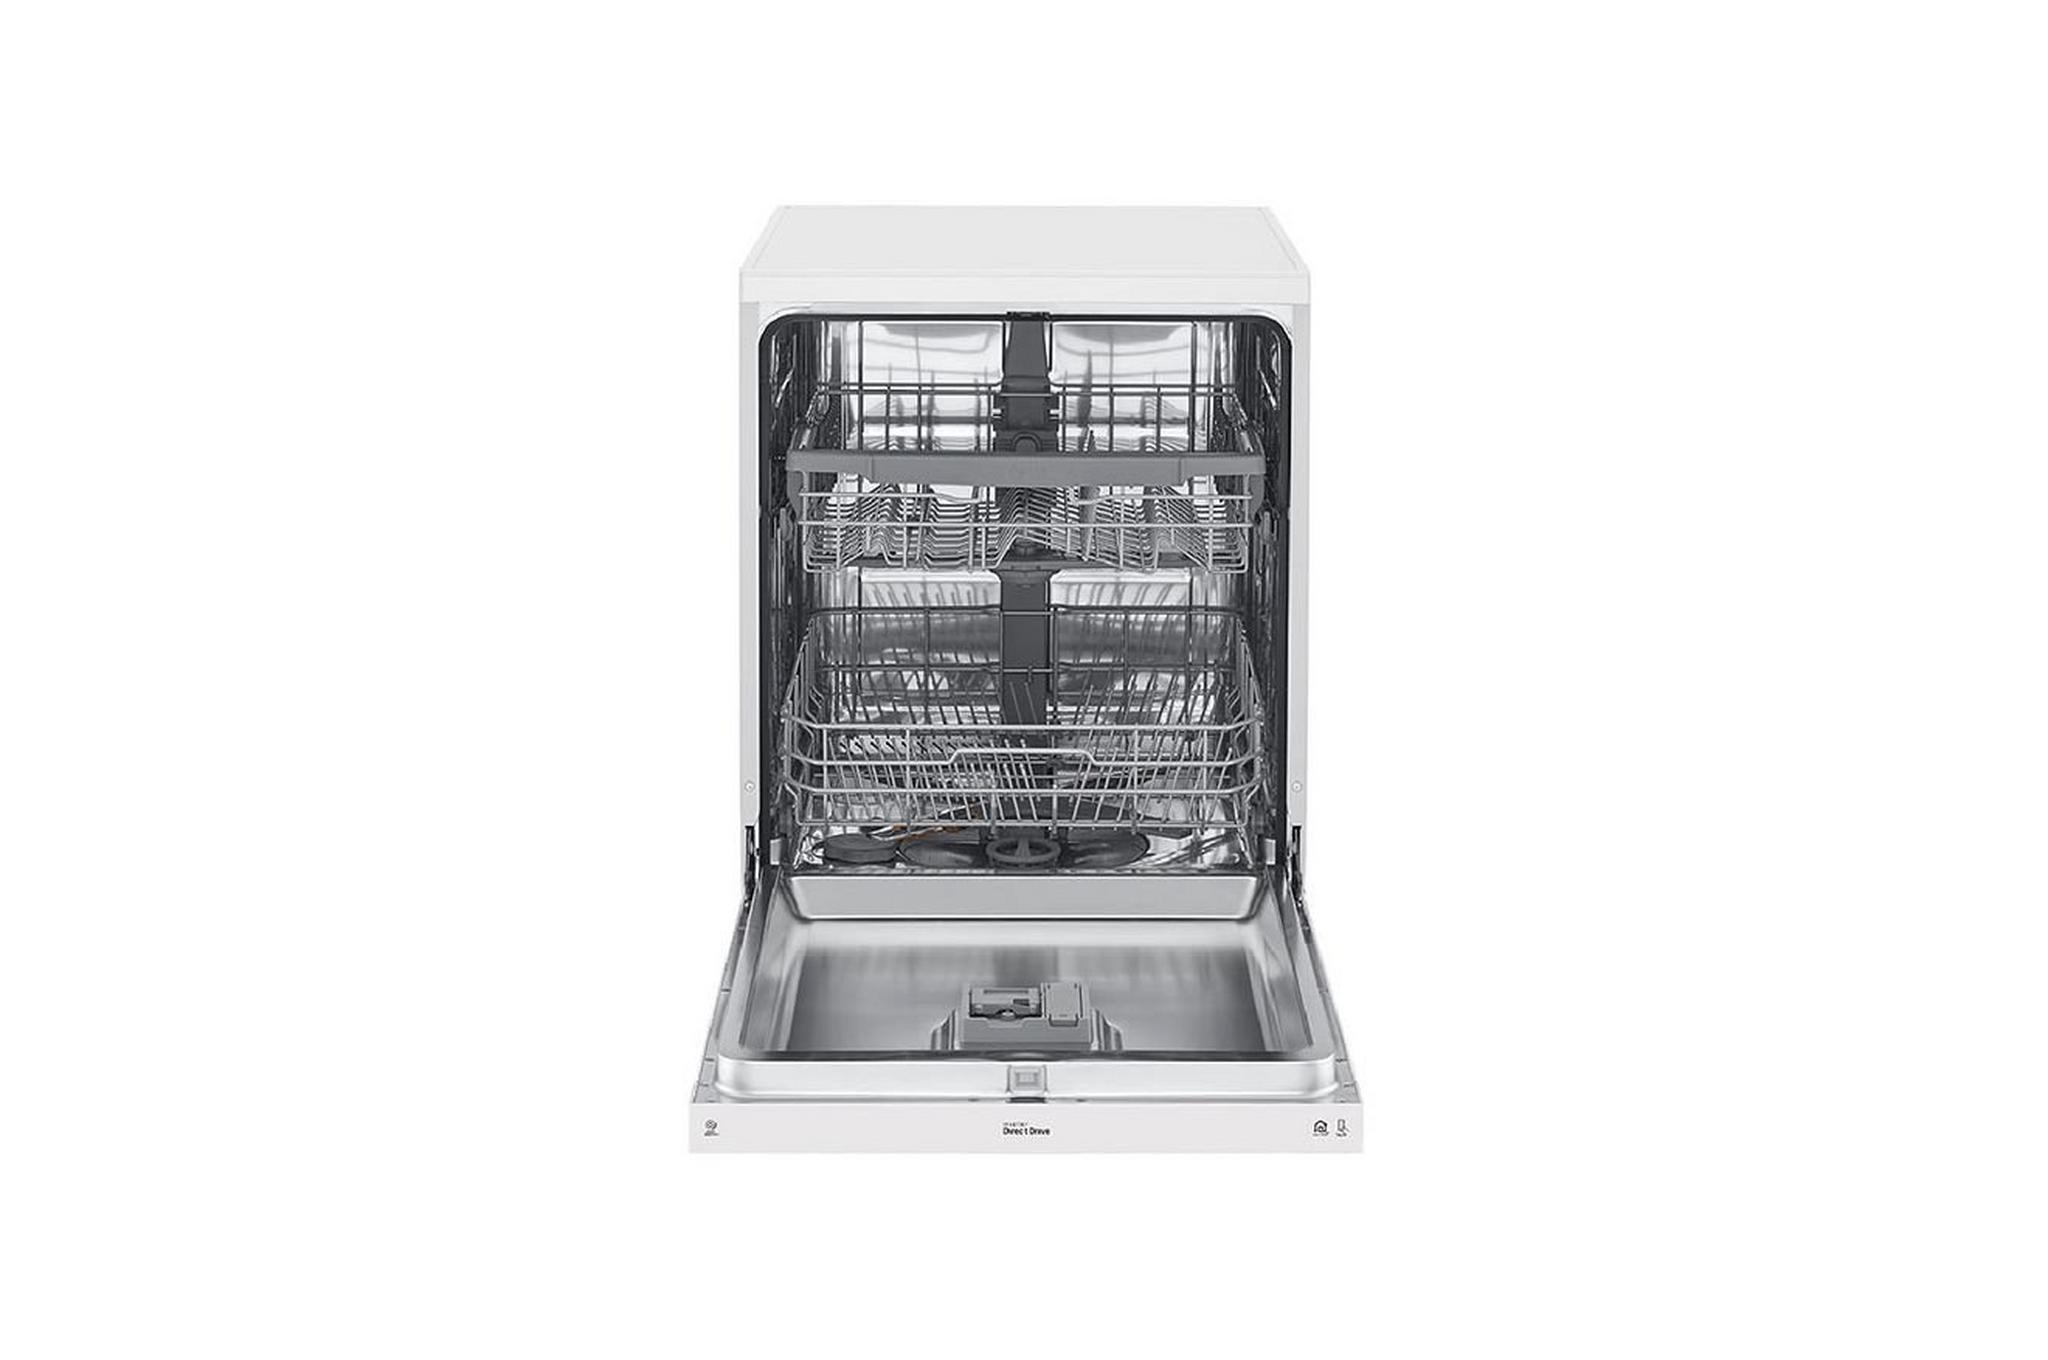 LG Smart Wi-fi Enabled 14 Place Settings Dishwasher (DFB425FW) - White